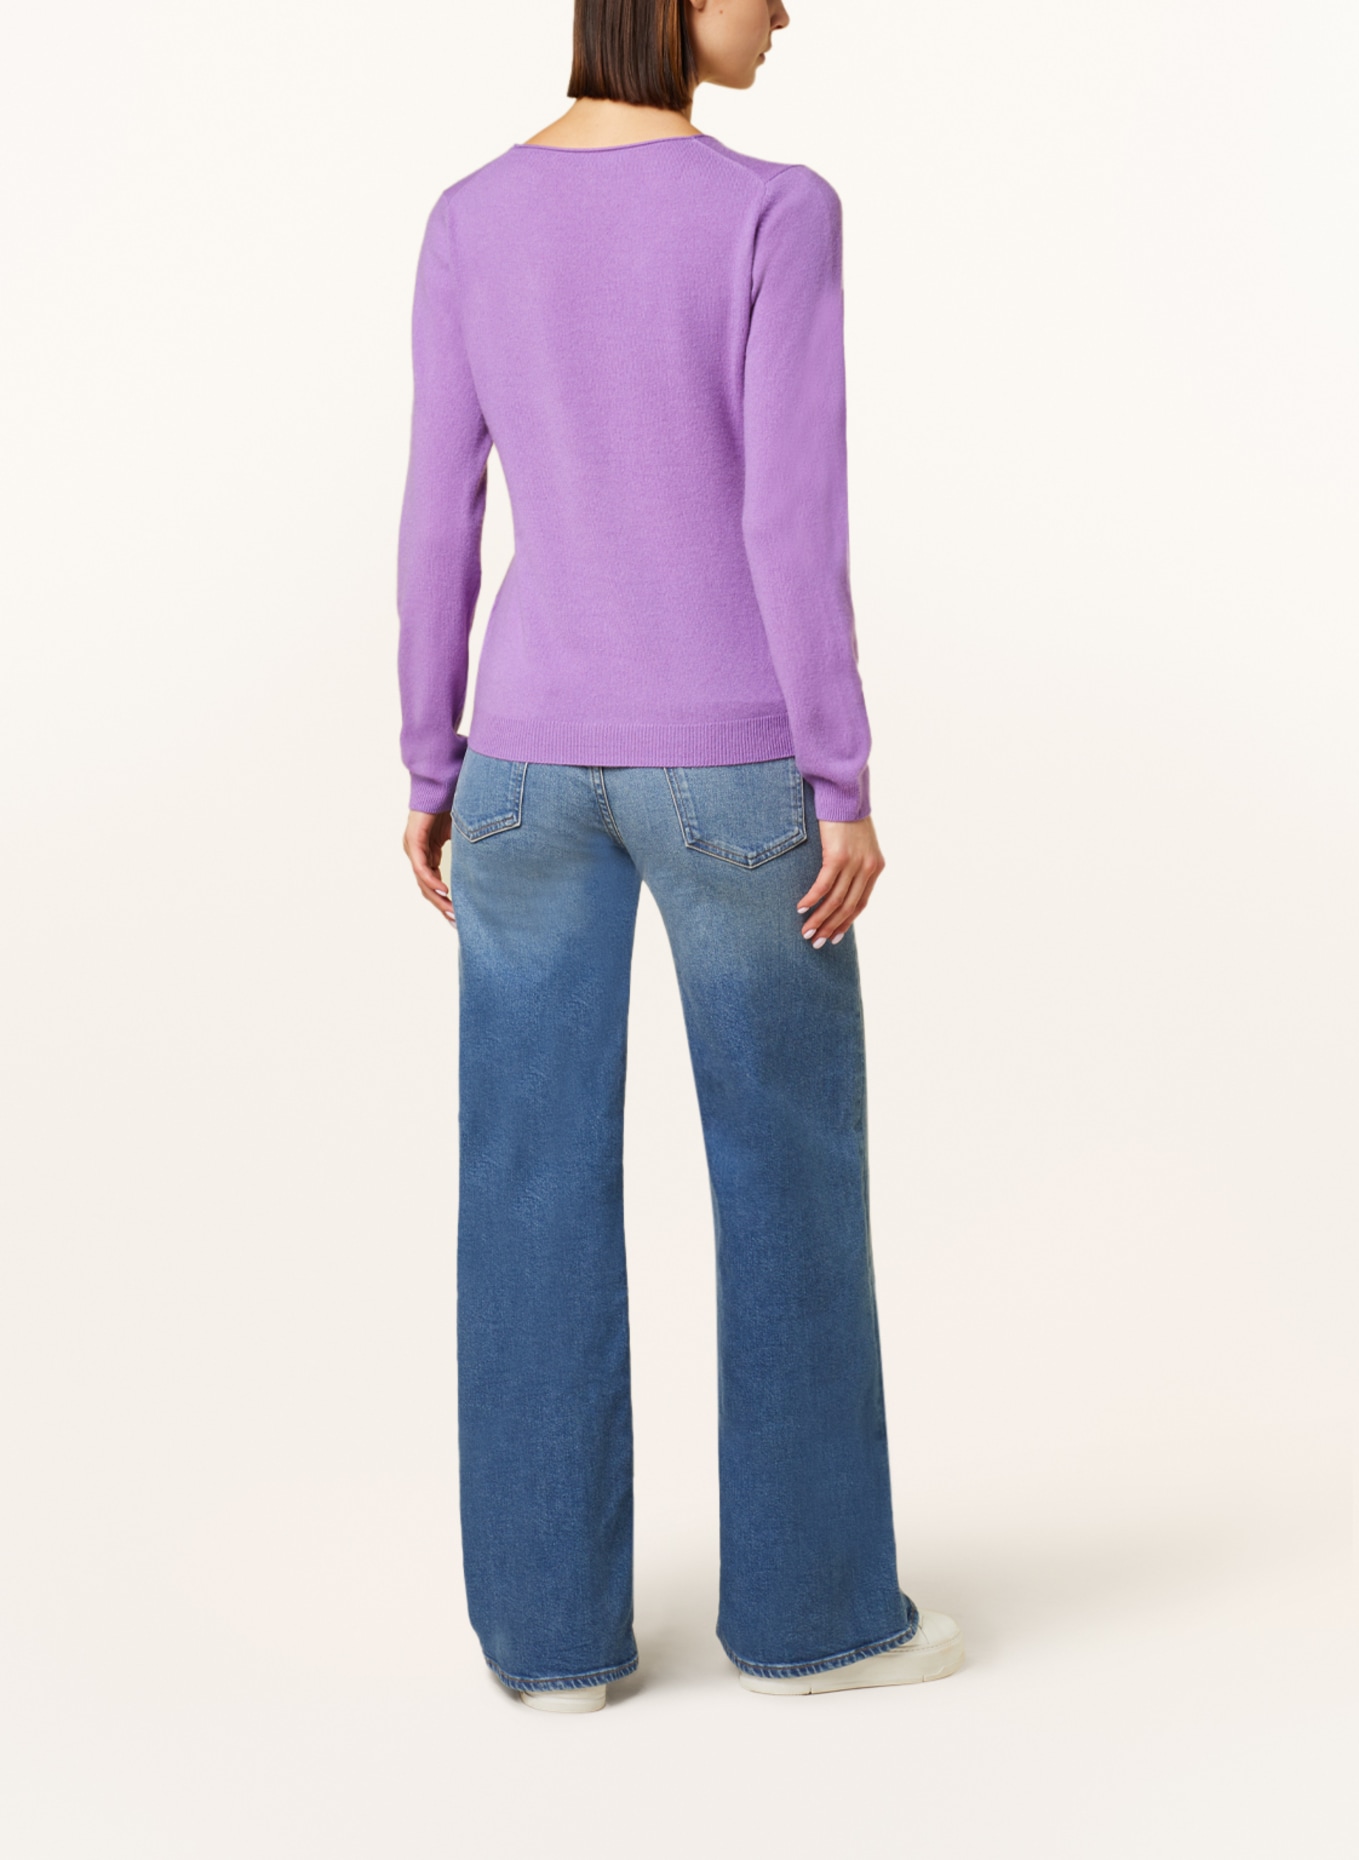 REPEAT Cashmere sweater, Color: PURPLE (Image 3)